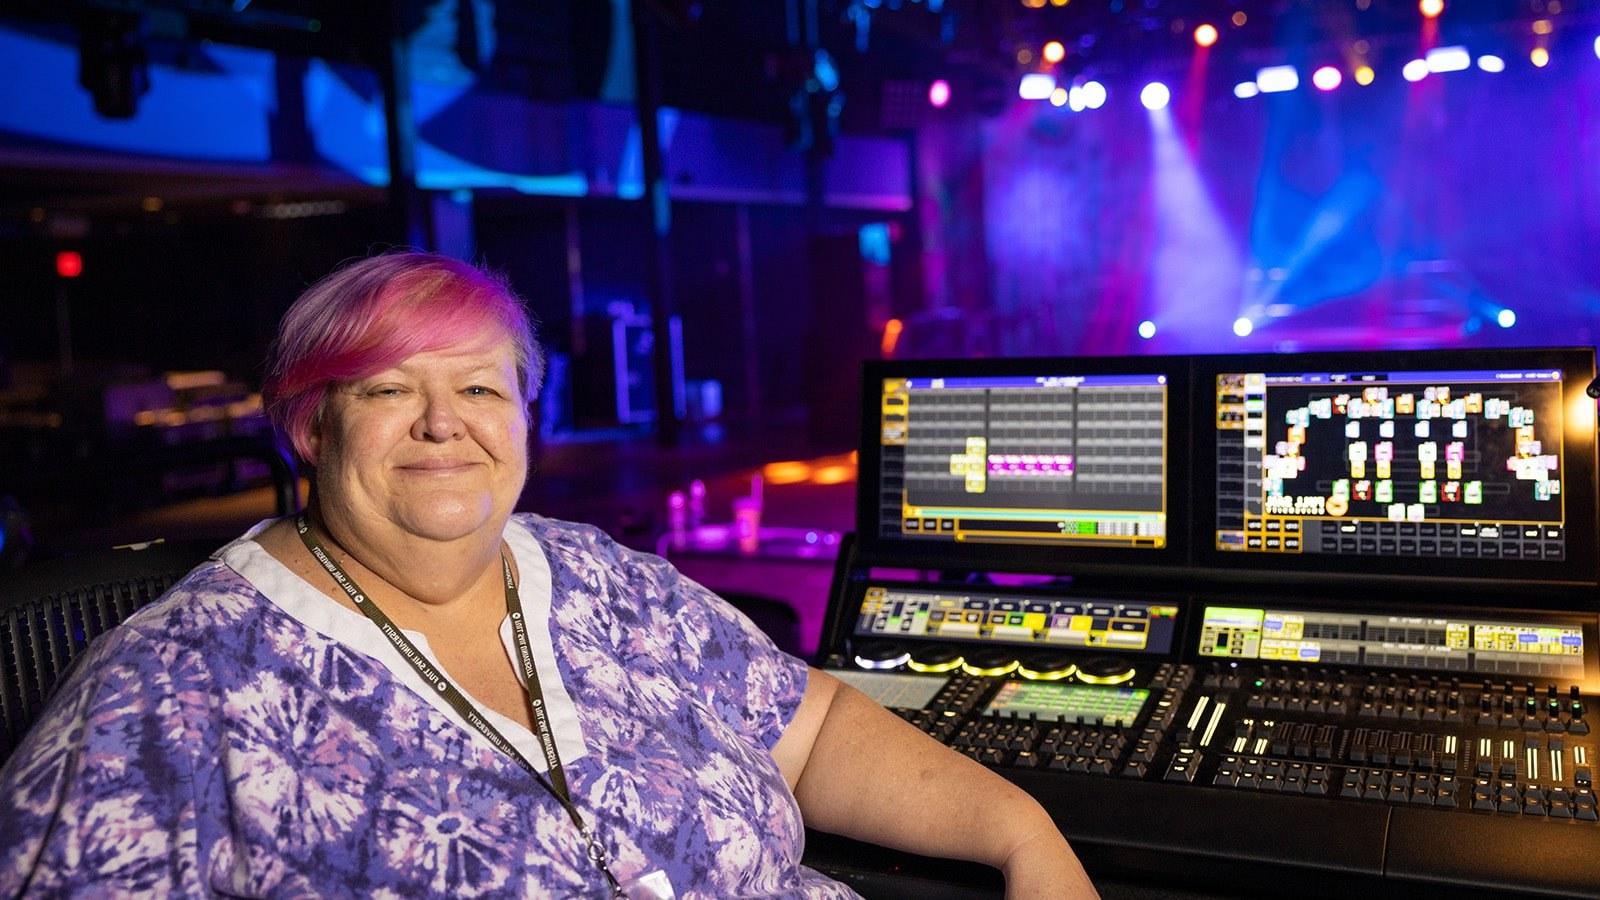 Susan Kelleher sits at a lighting console. 她身后的舞台被紫色、蓝色和白色的灯光照亮.